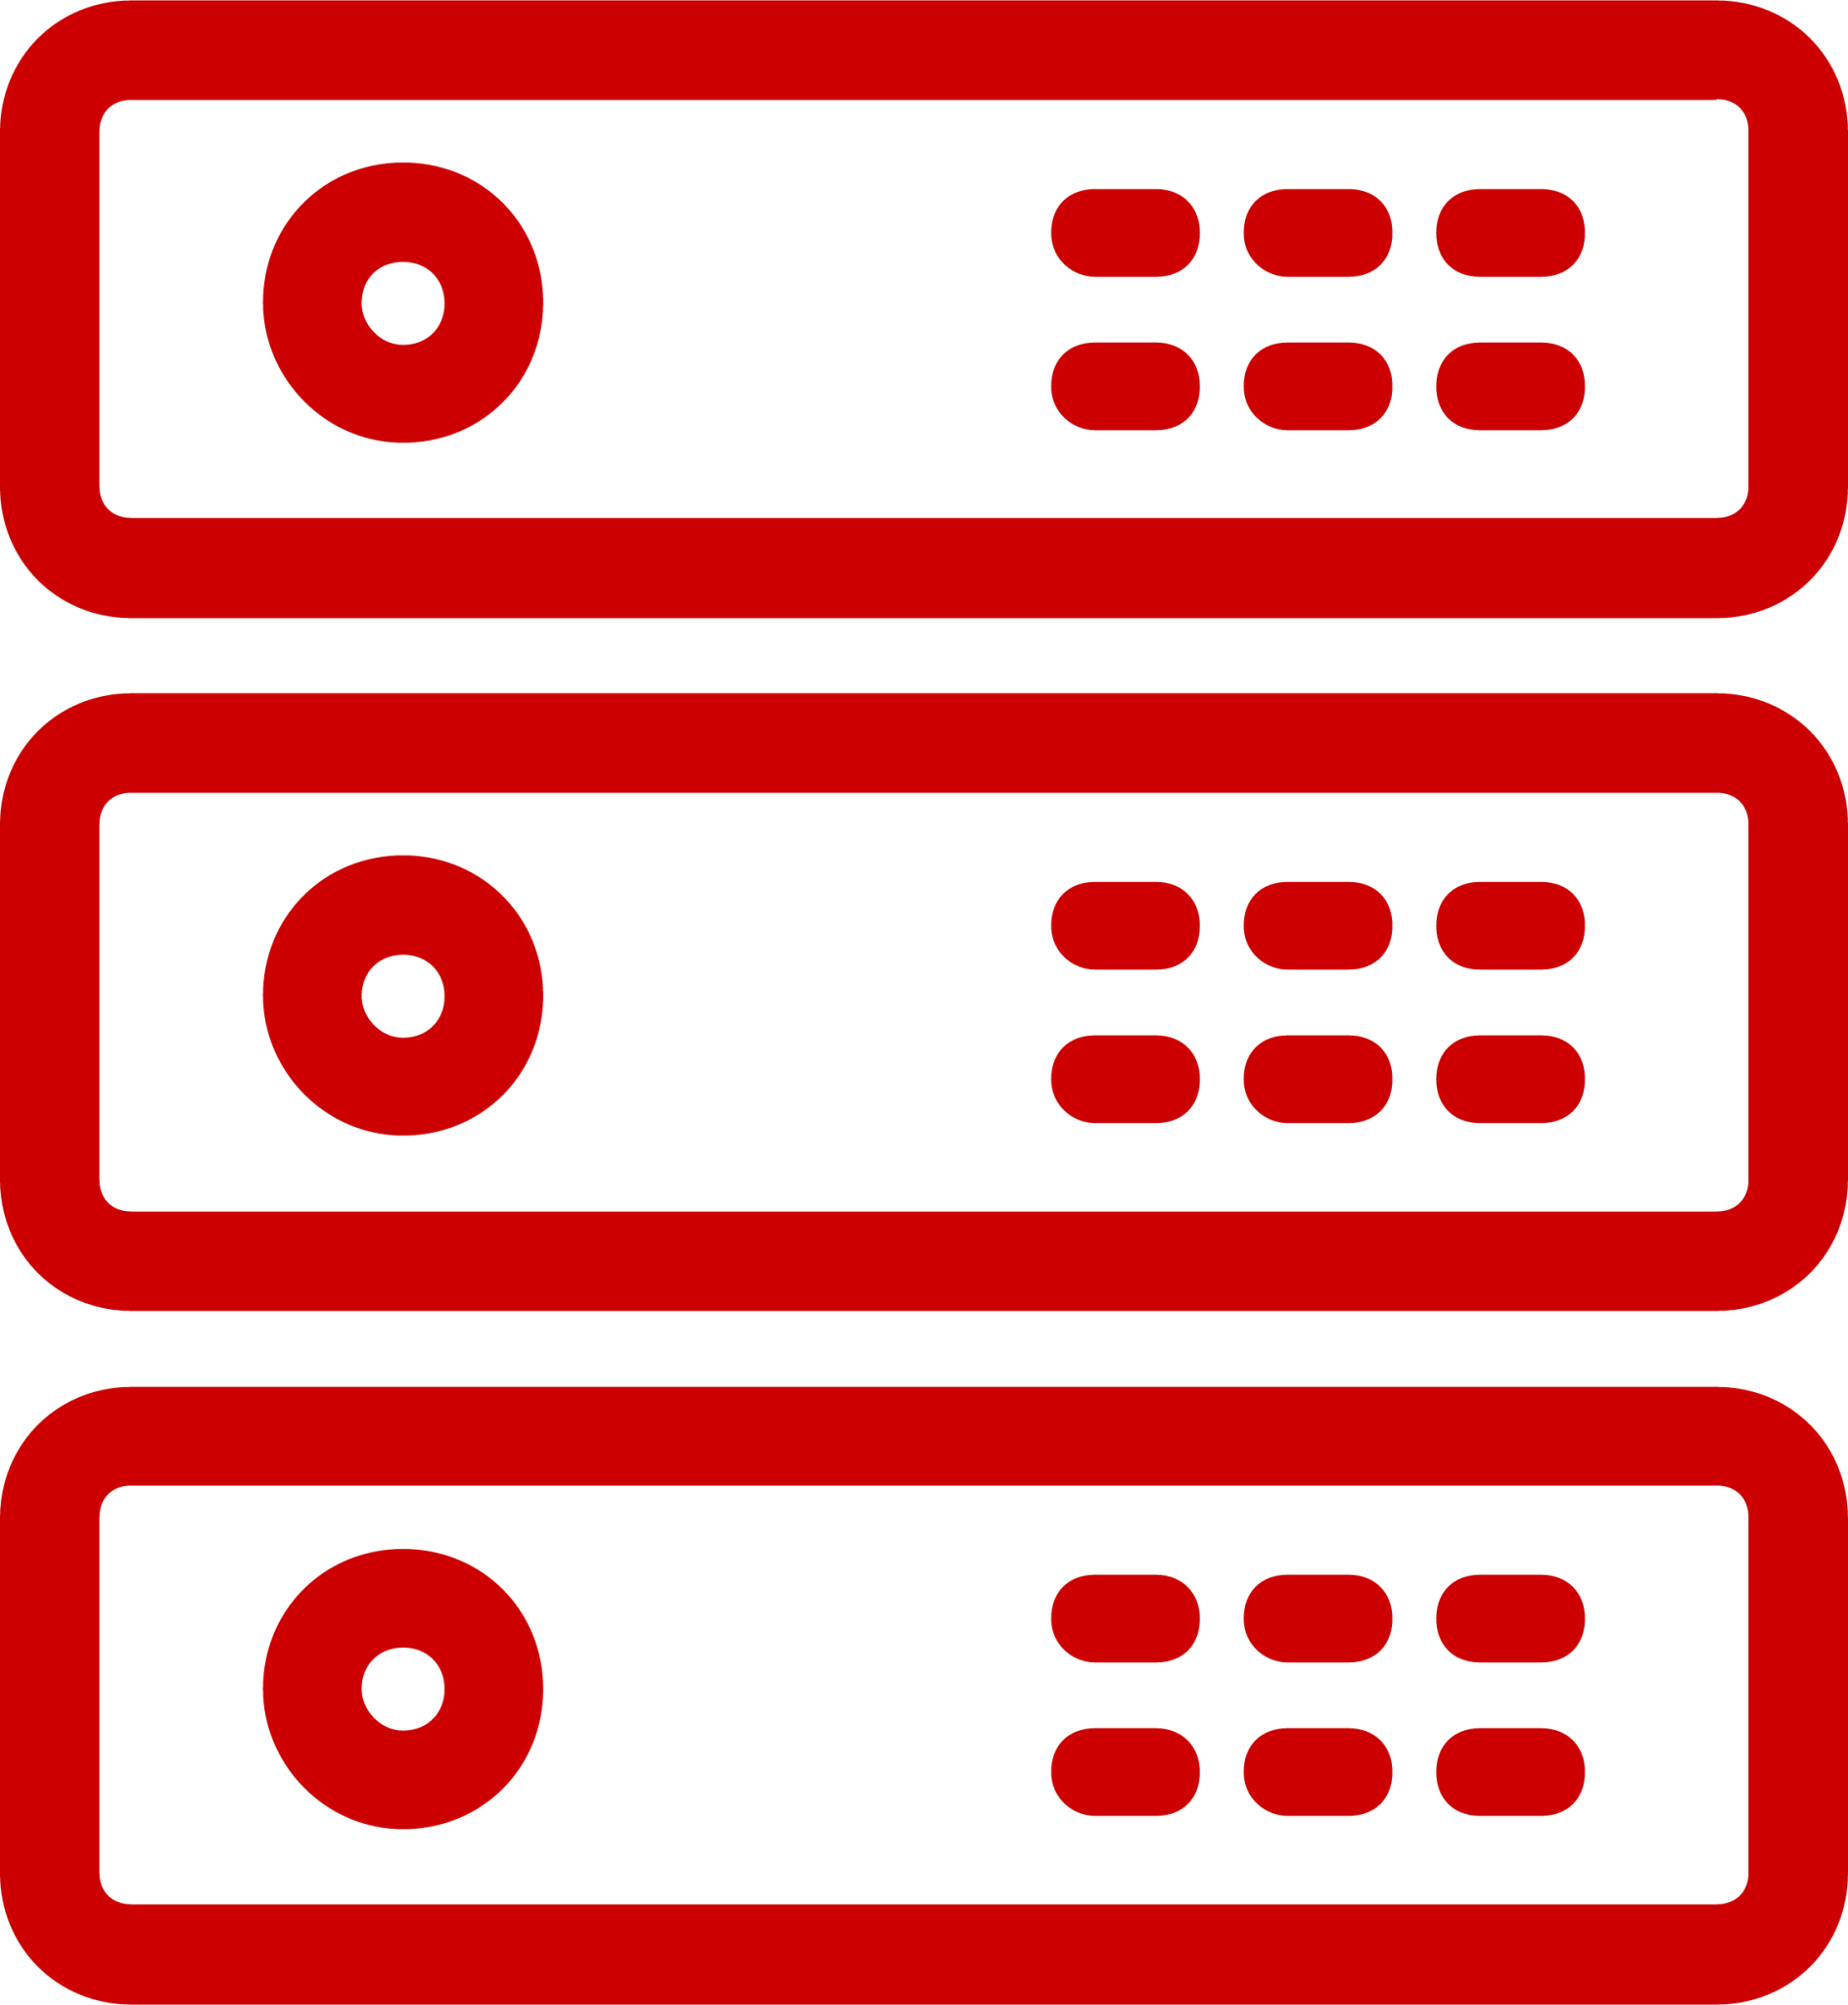 server rack (red) icon